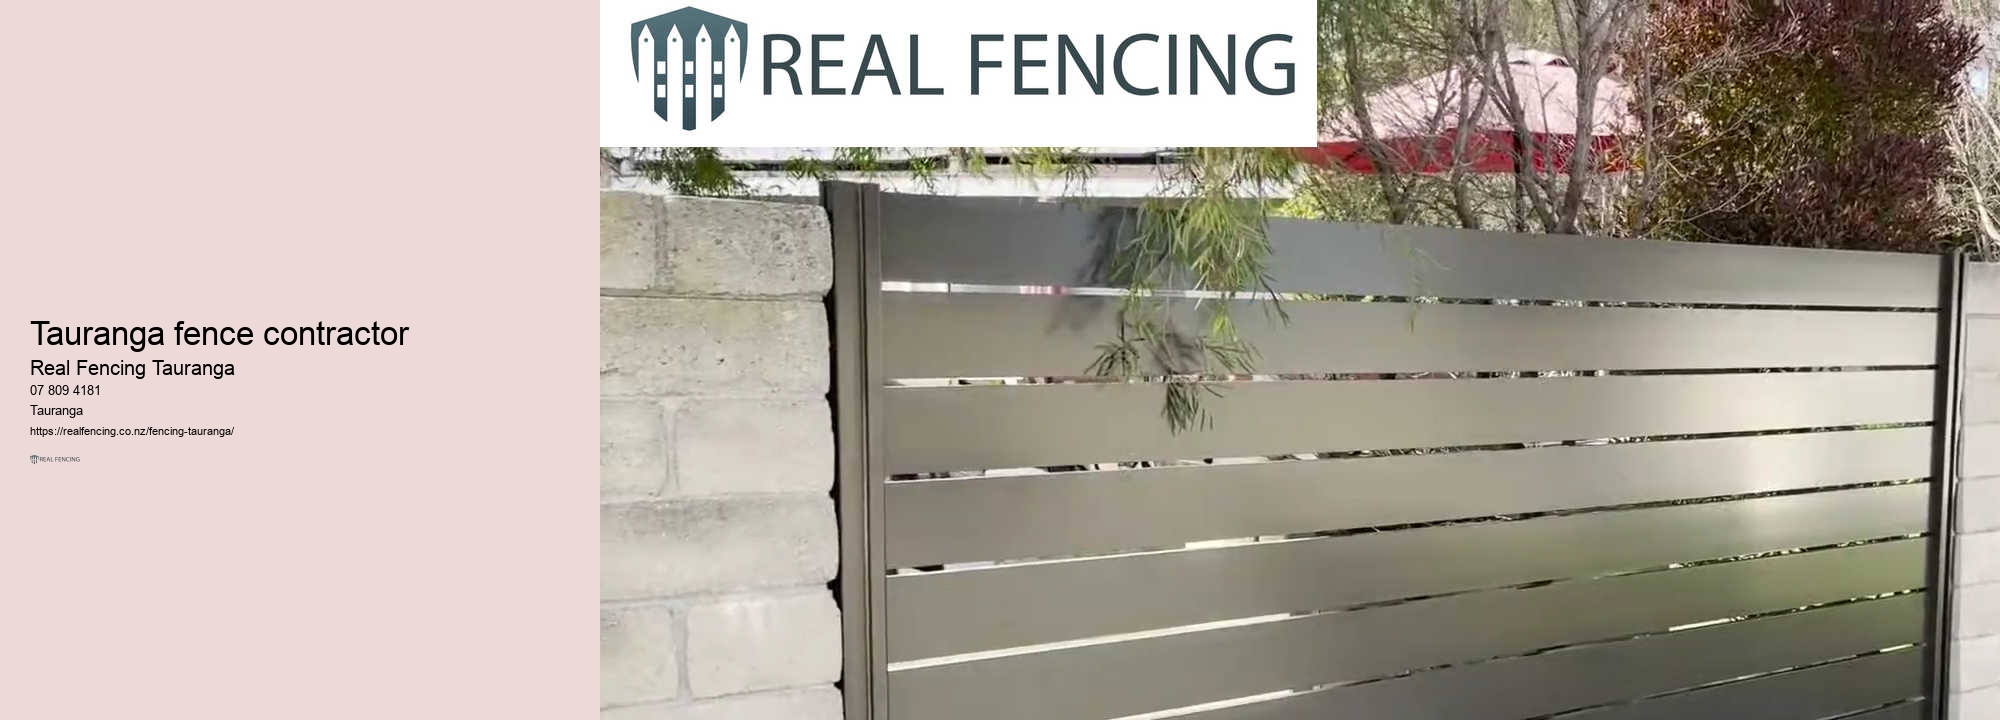 Tauranga fence contractor